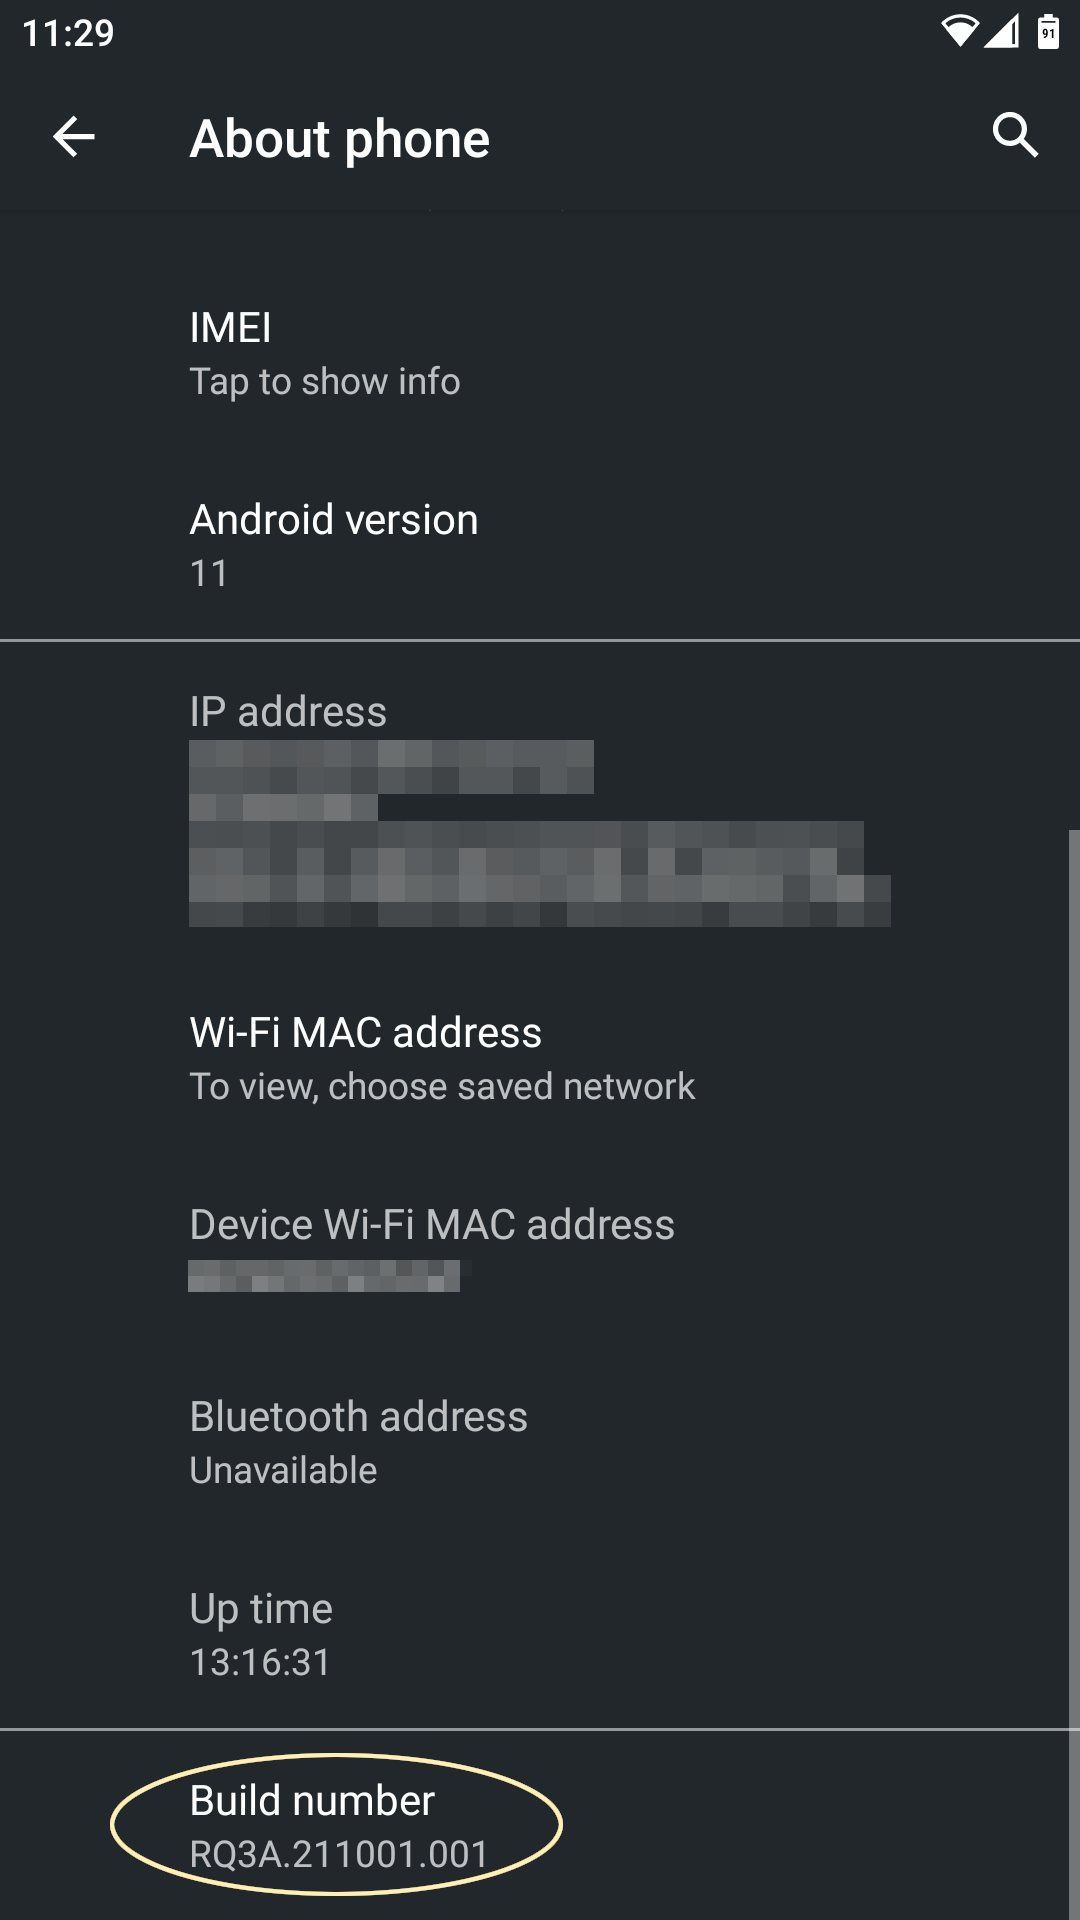 Android settings screen for enabling developer options